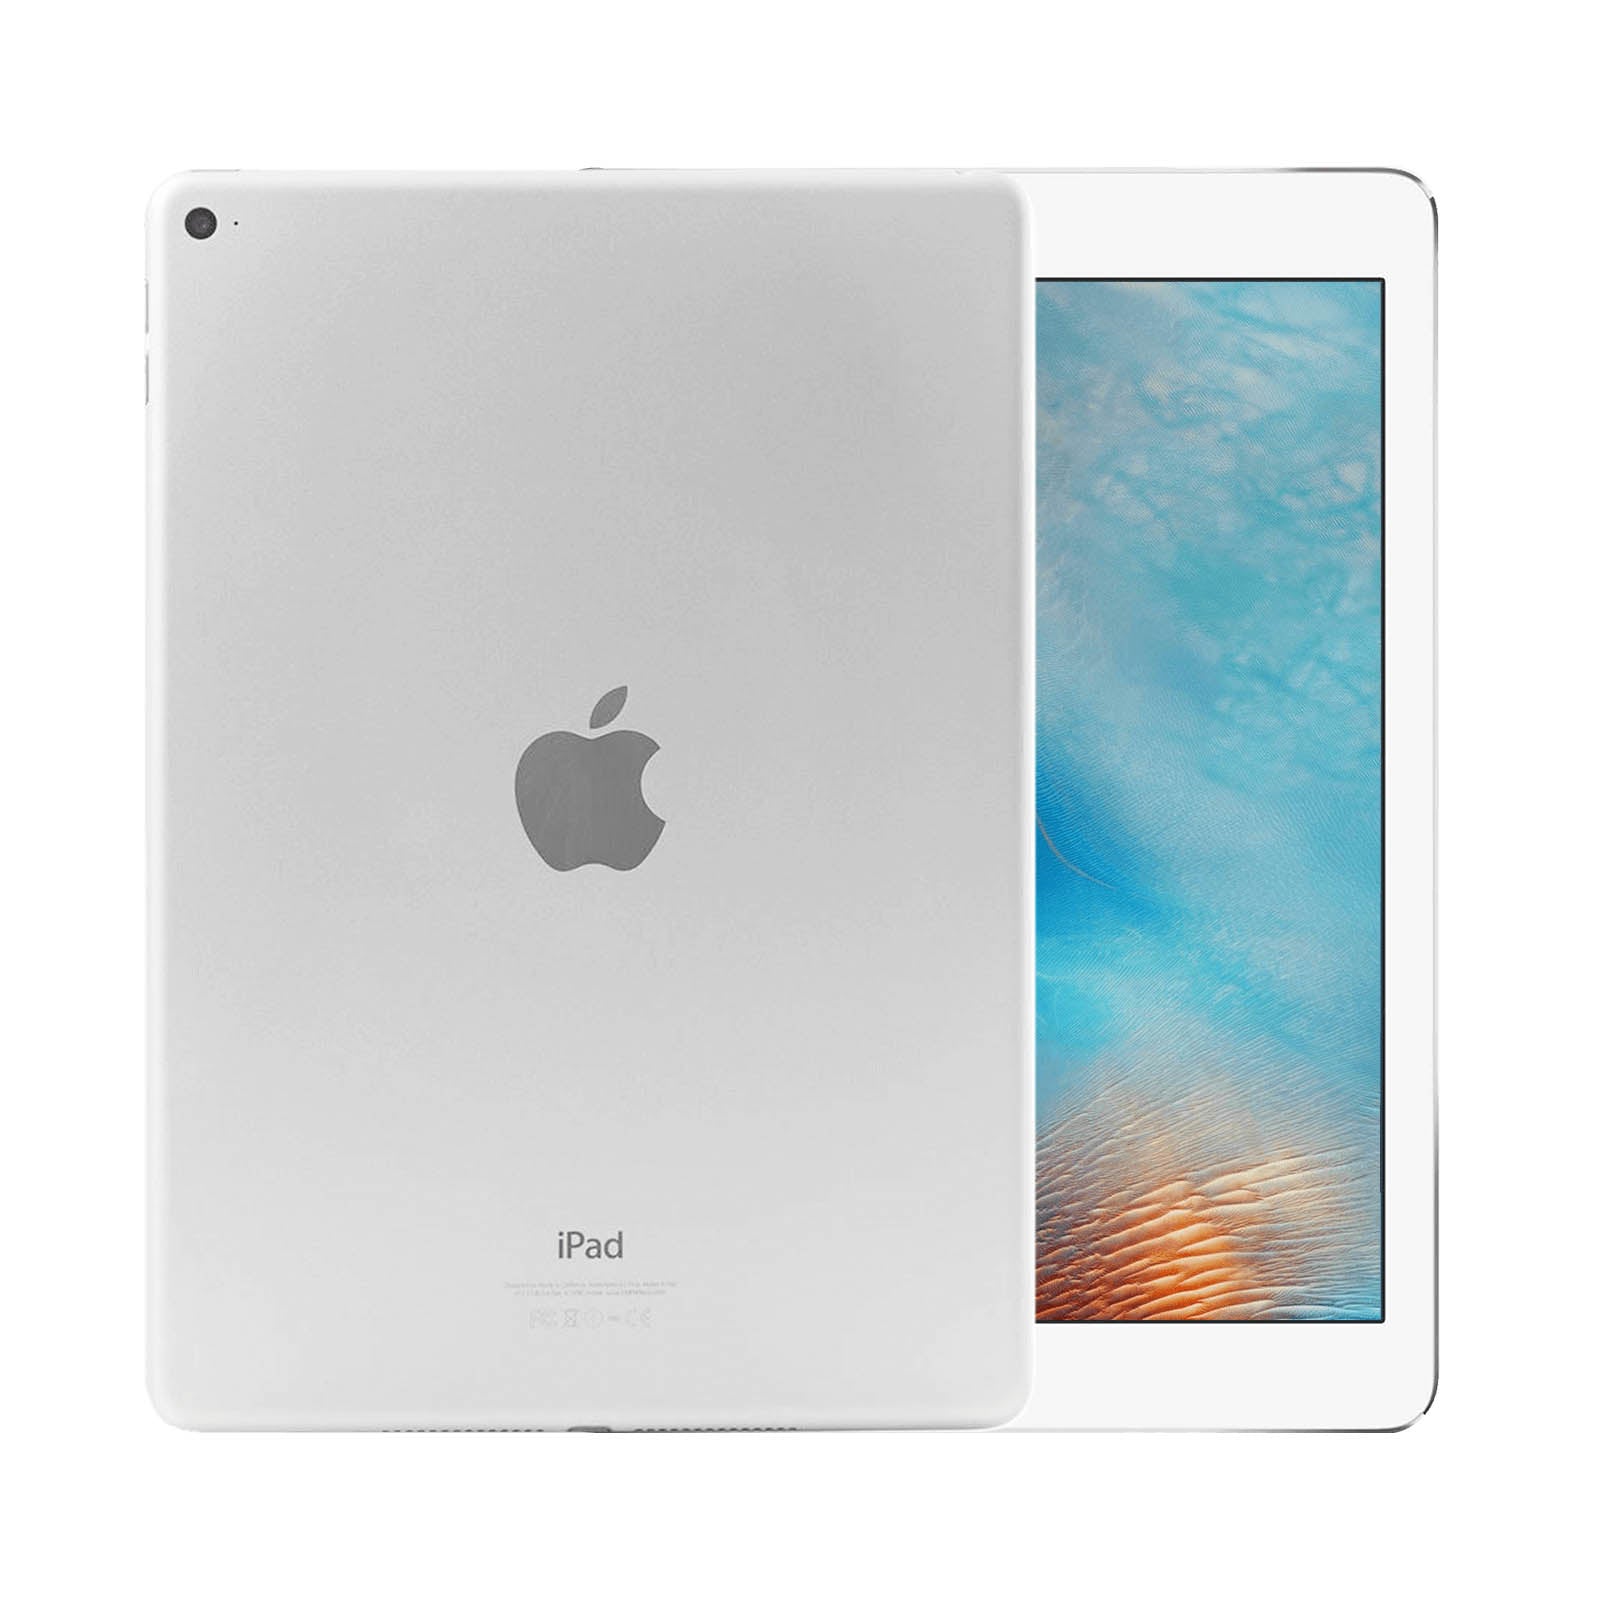 Ristrutturatoished Apple iPad Air 2 64GB WiFi Argento Buono